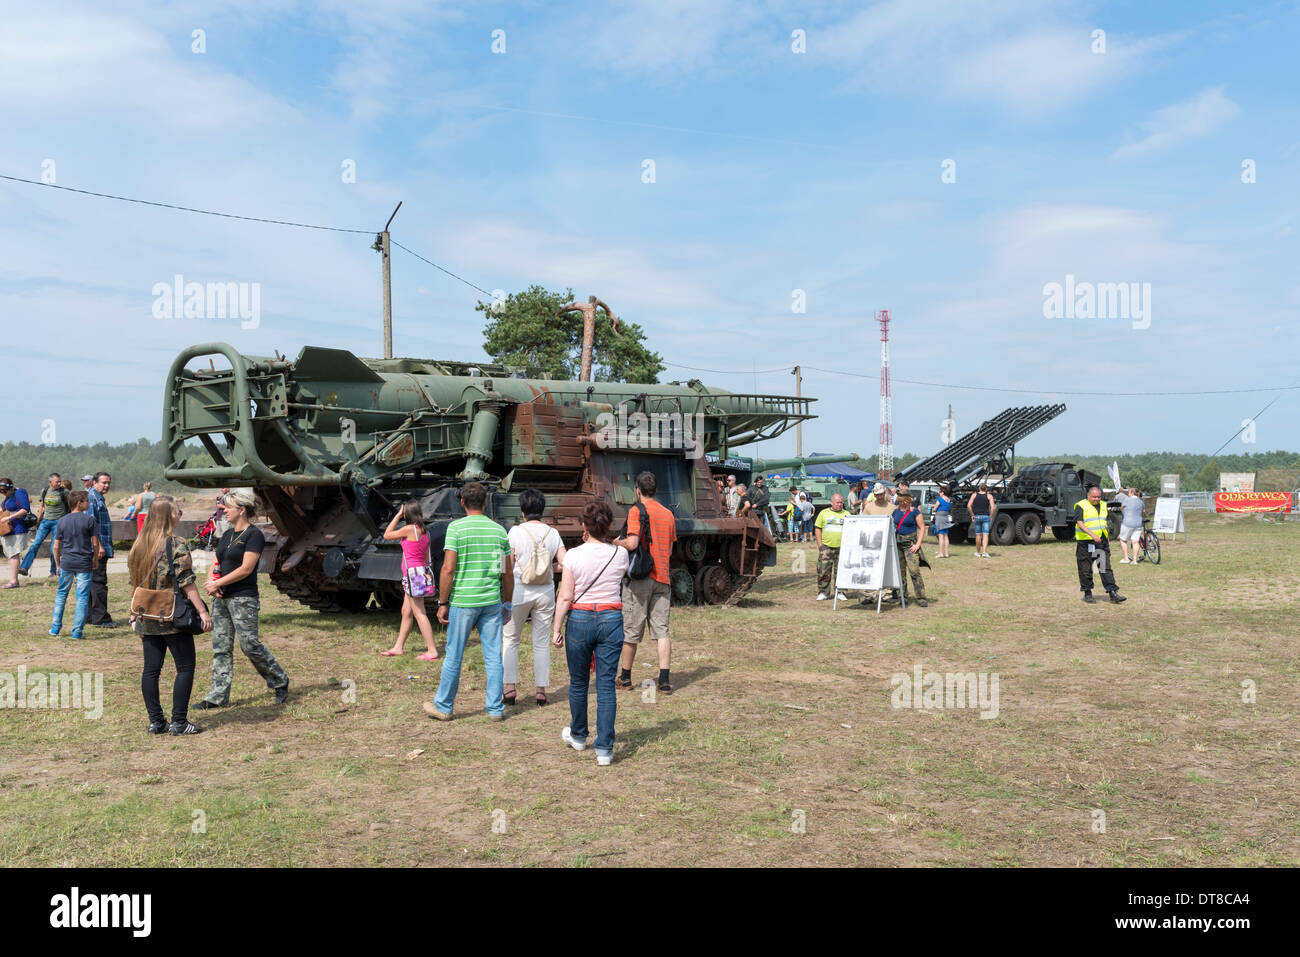 'X International meeting of military vehicles TRACKS AND HORSESHOE' in Borne Sulinowo, Poland Stock Photo